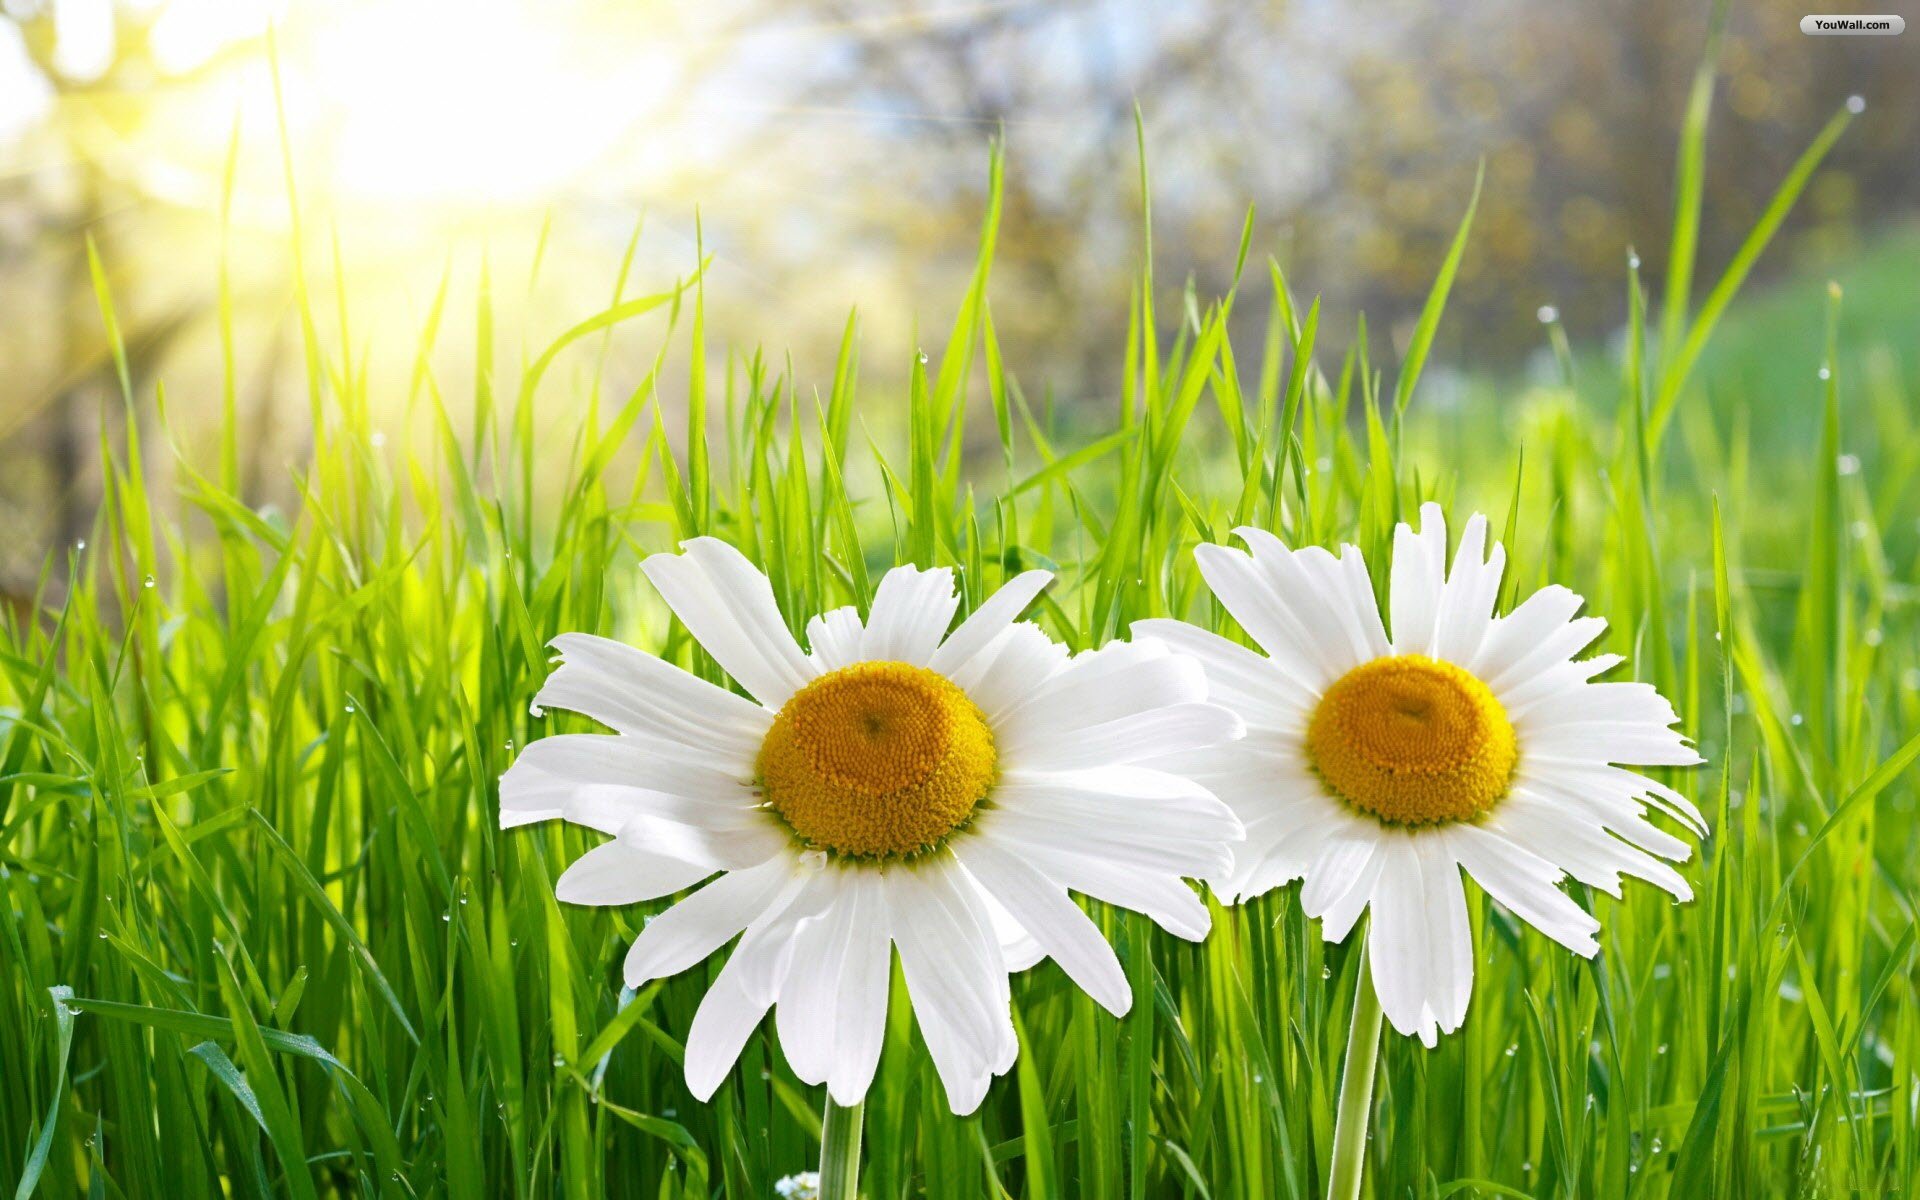 Flowering Plants: Daisies, Daisy - FLOWERING PLANTS,